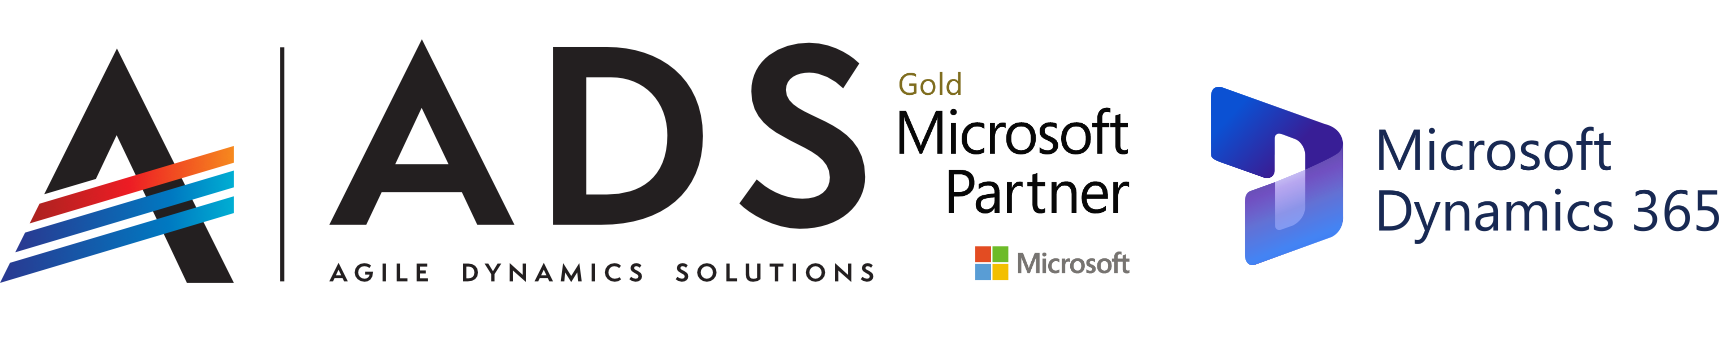 #1 Gold Dynamics 365 Microsoft Partner in Malaysia